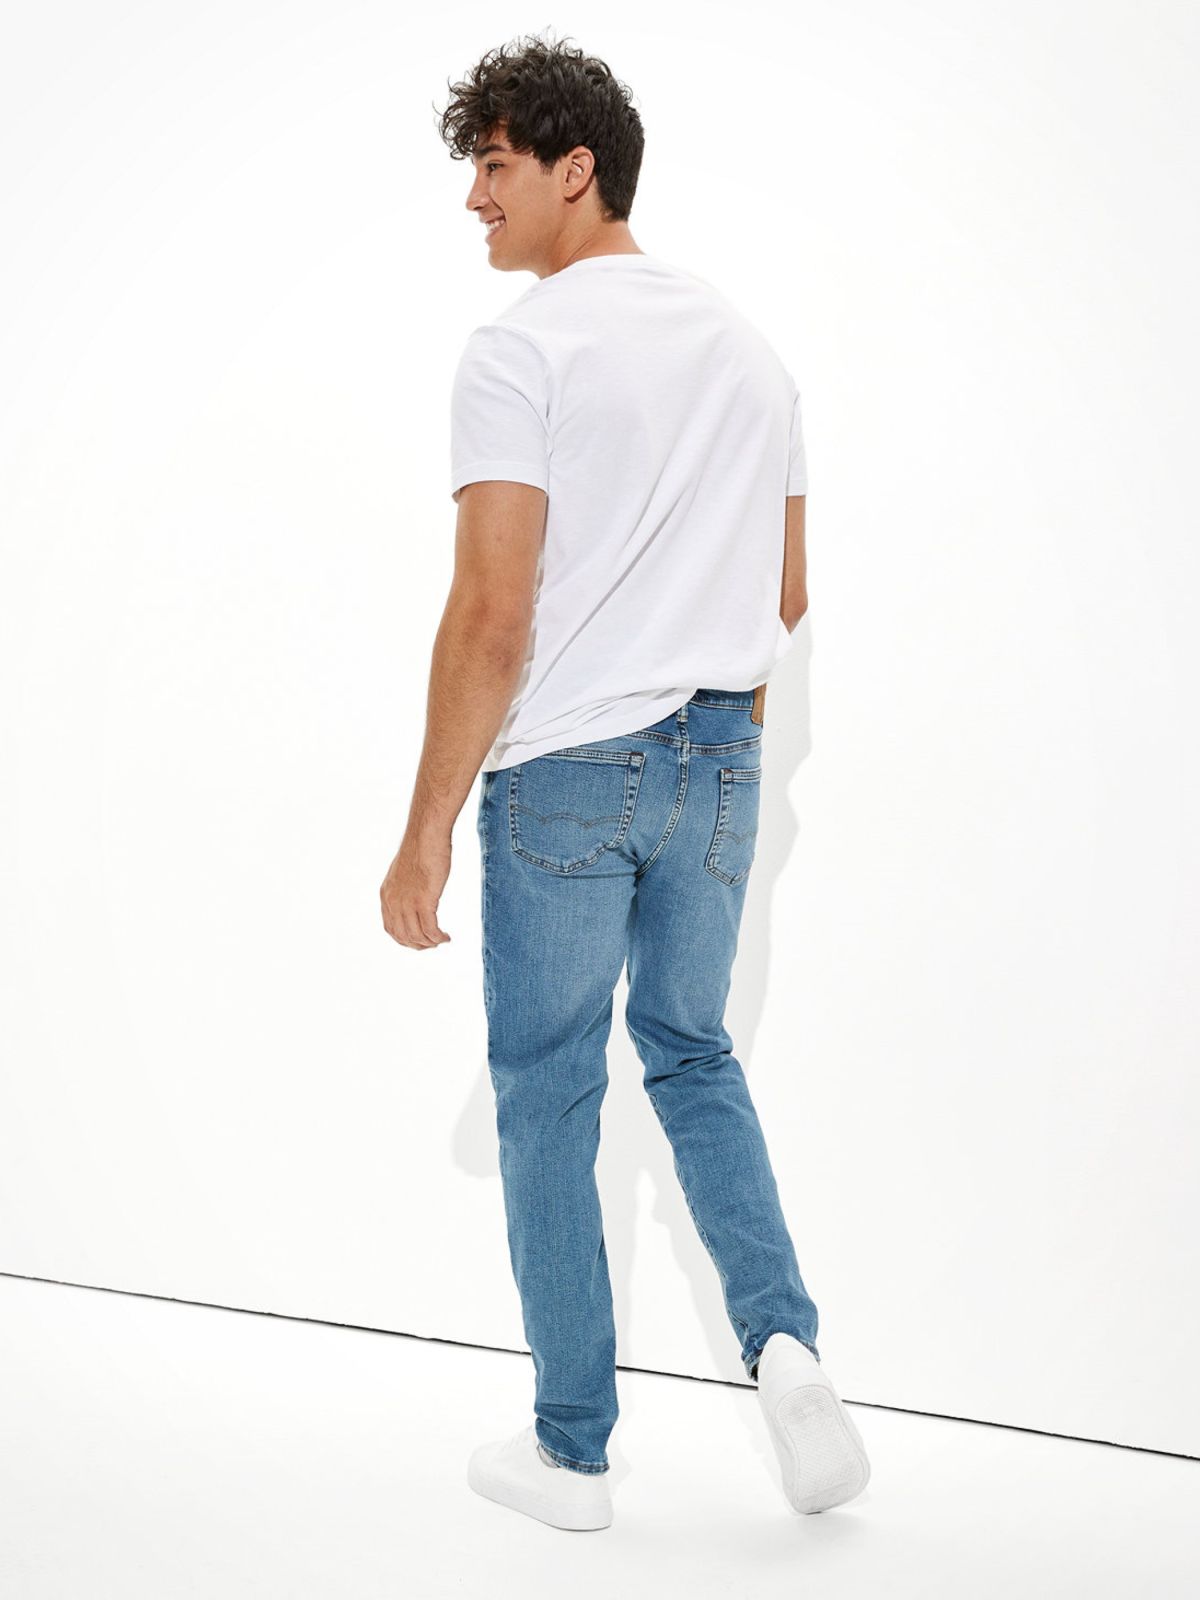  ג'ינס סקיני Medium clean של AMERICAN EAGLE